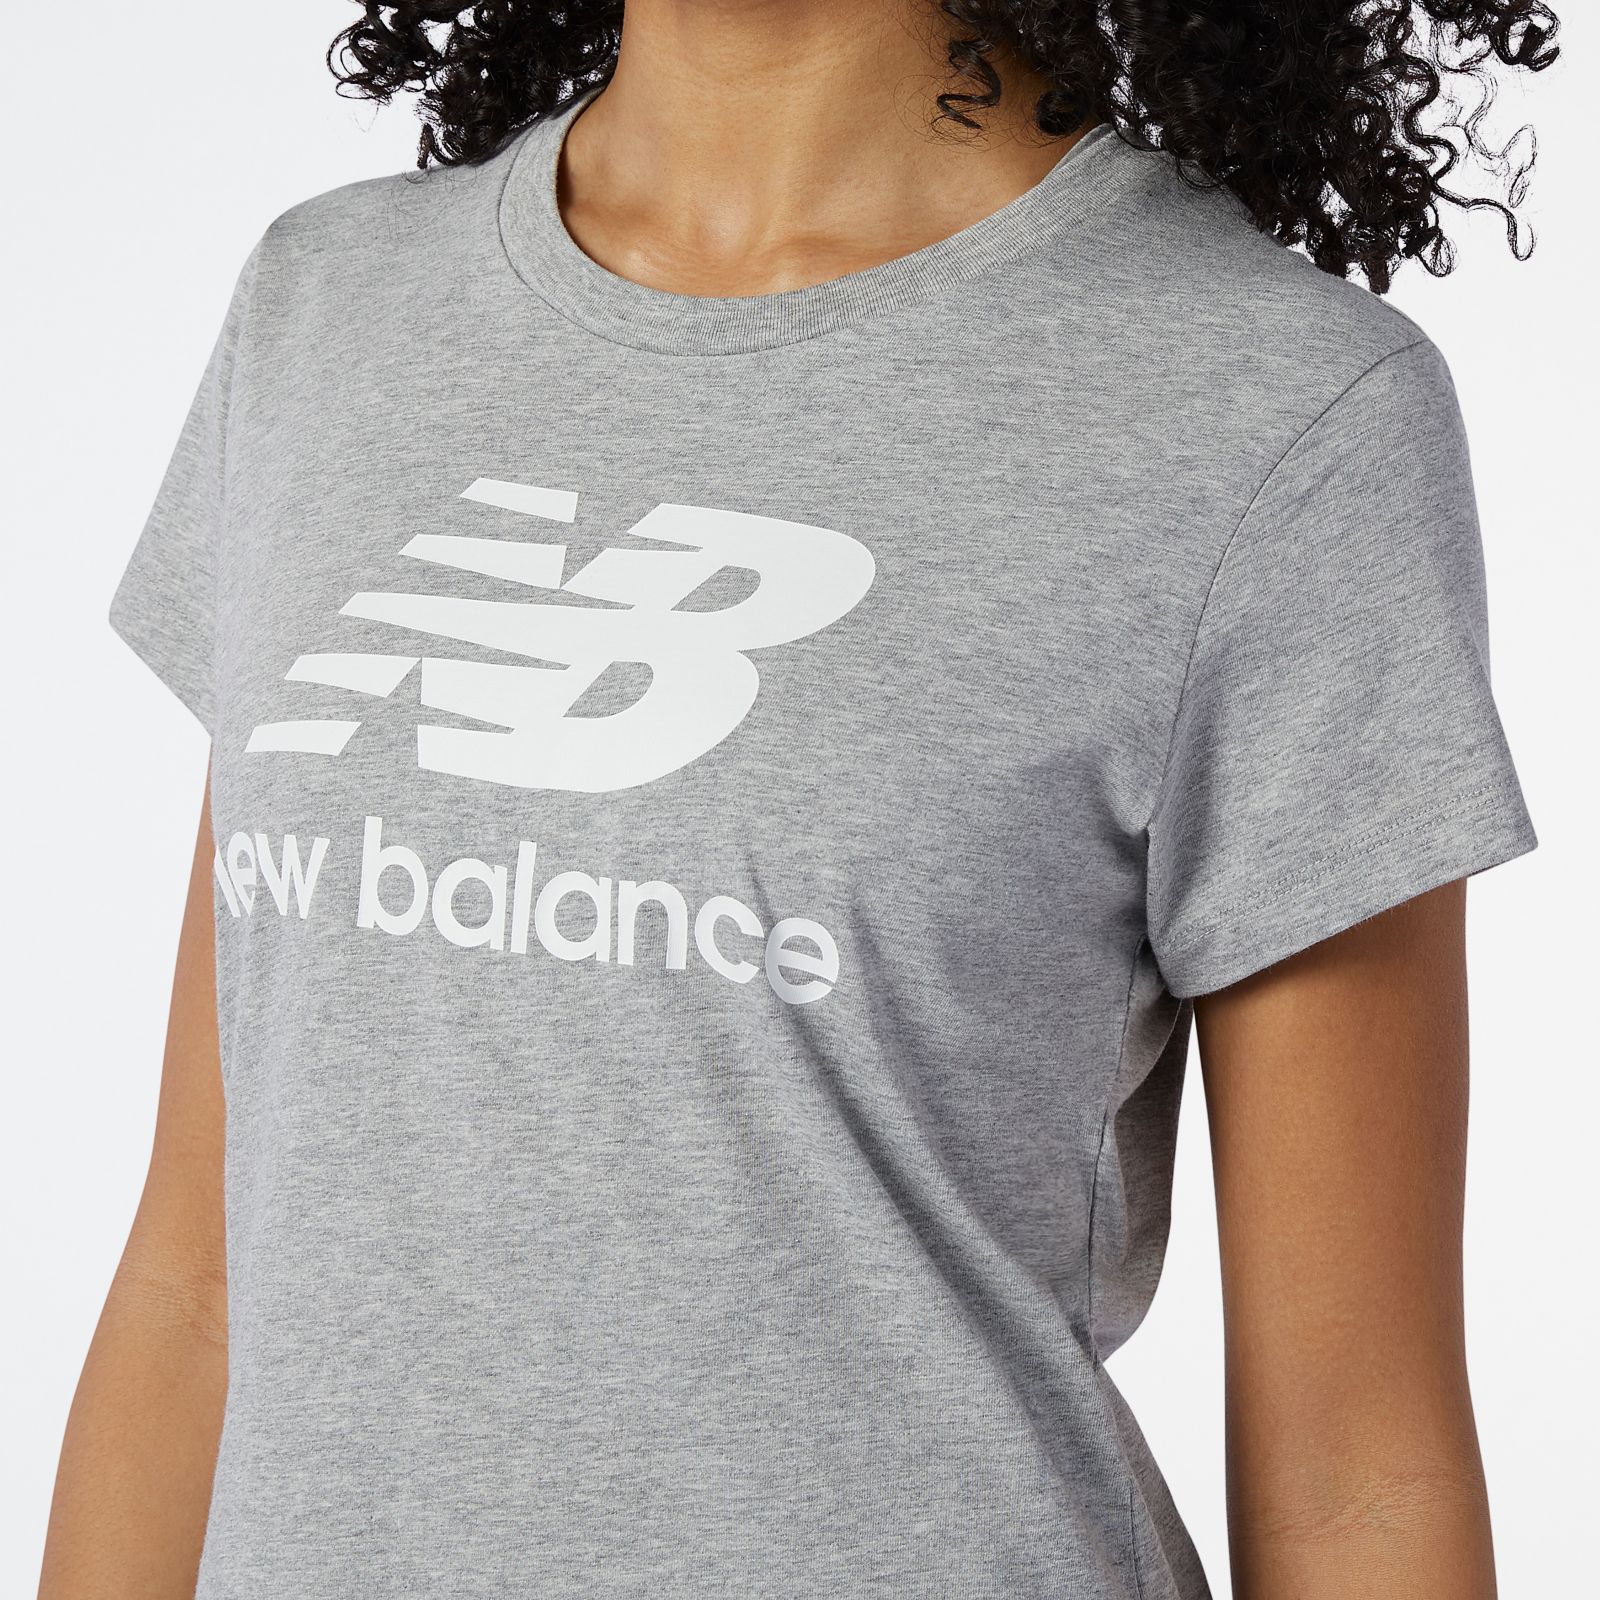 NB Essentials Stacked Logo Tee - New Balance